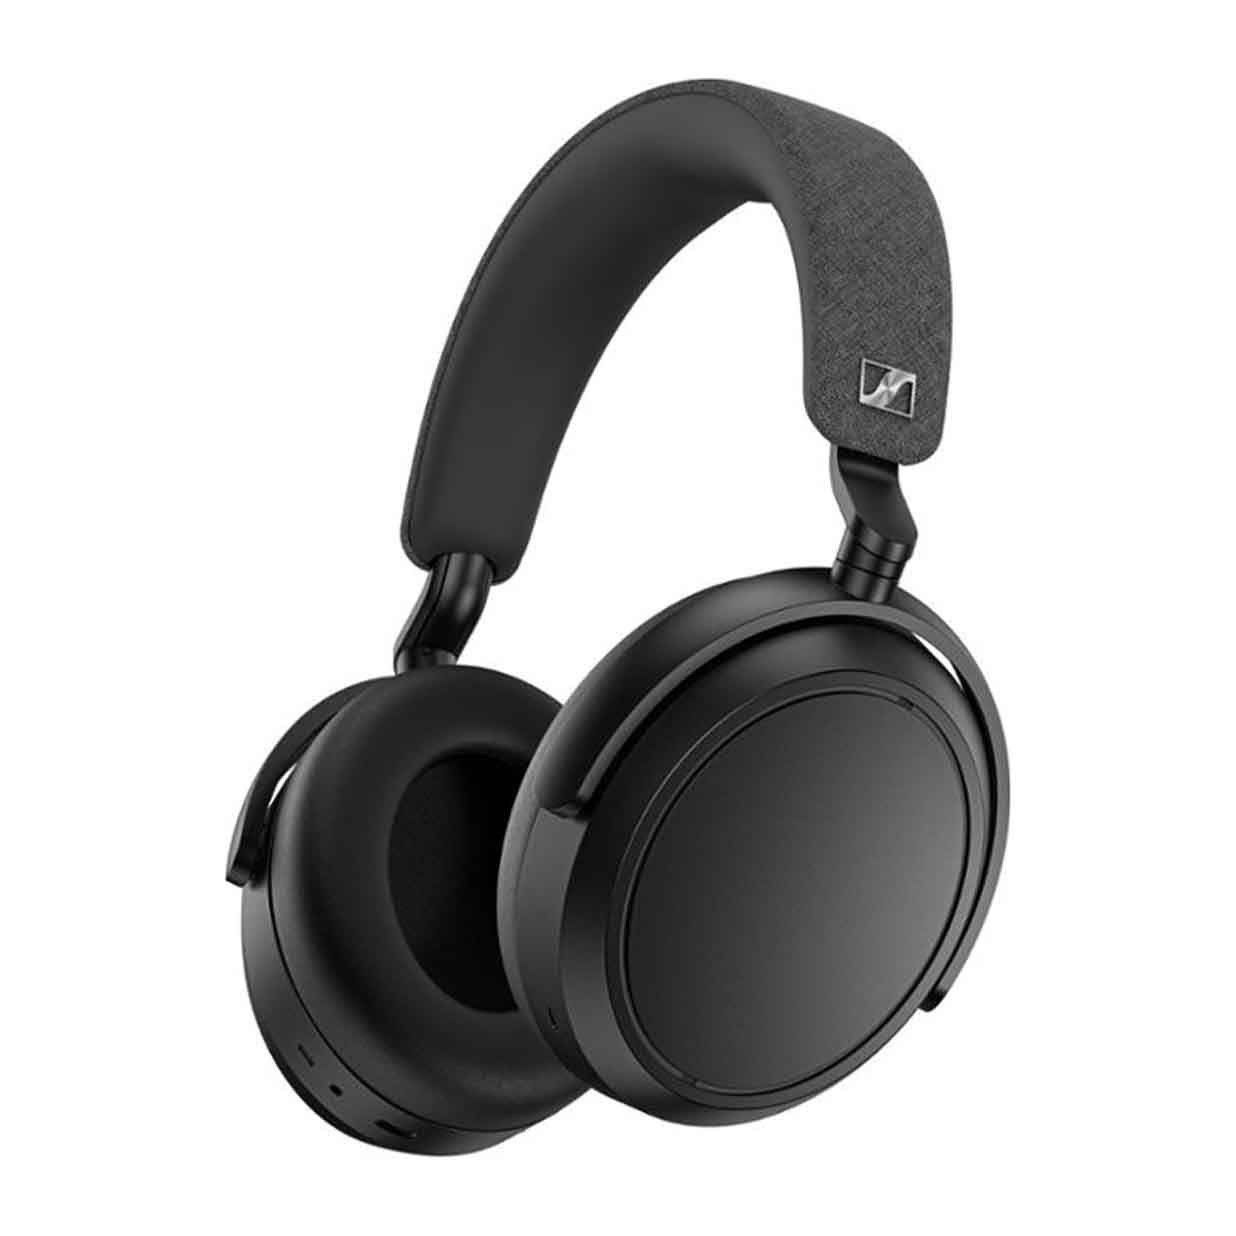 Sennheiser Momentum 4 Wireless Adaptive Noise-Canceling Over-The-Ear Headphones in black